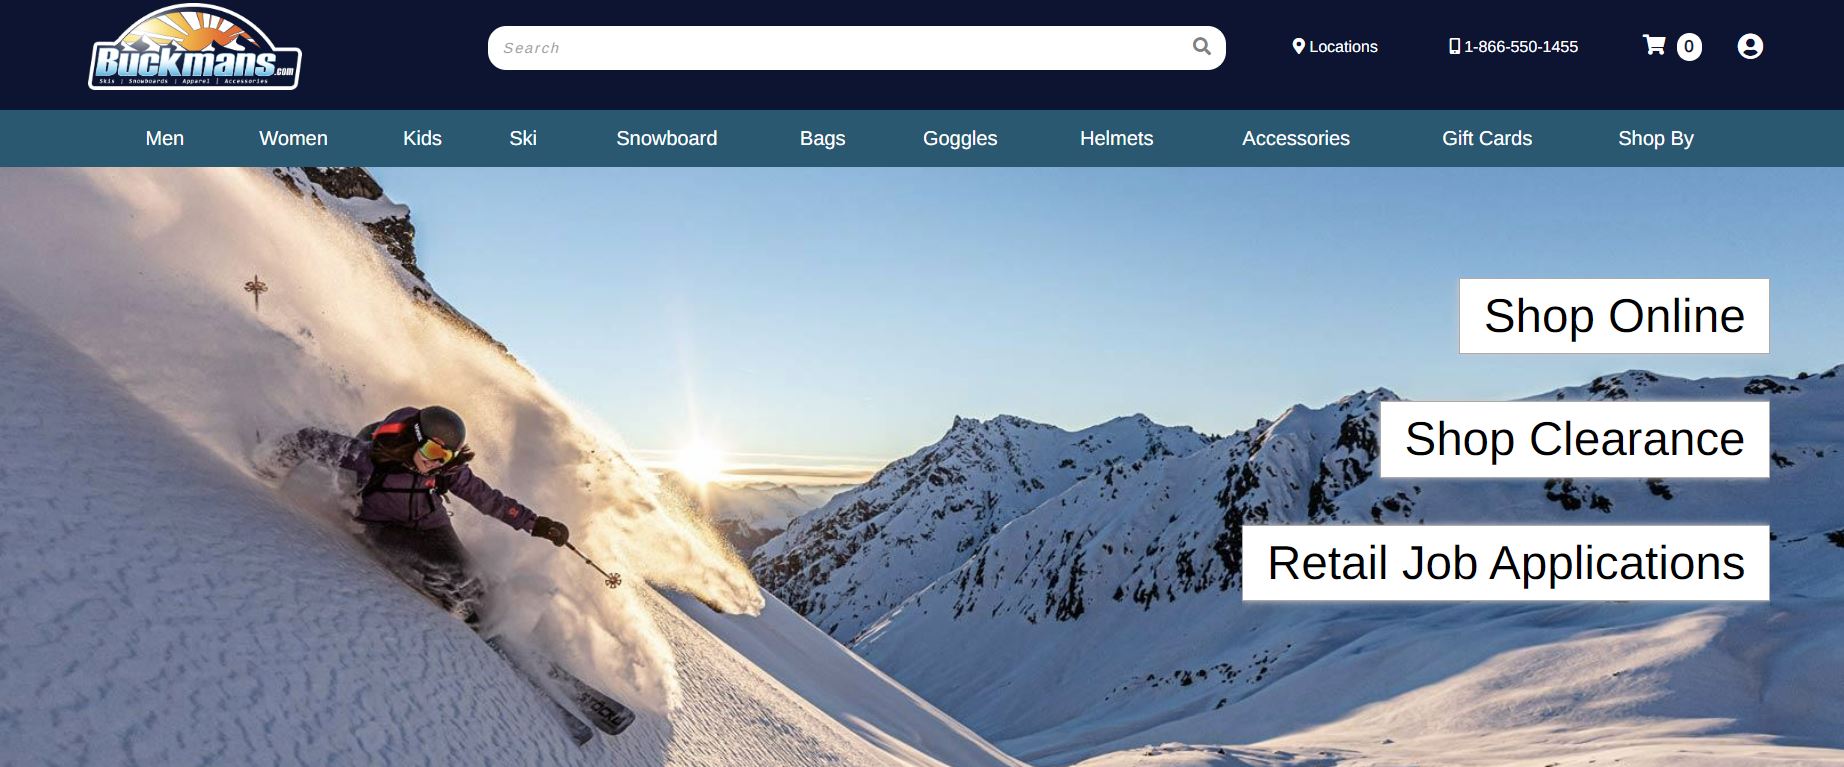 Buckman's Ski and Snowboard Shops' Domain Strategy